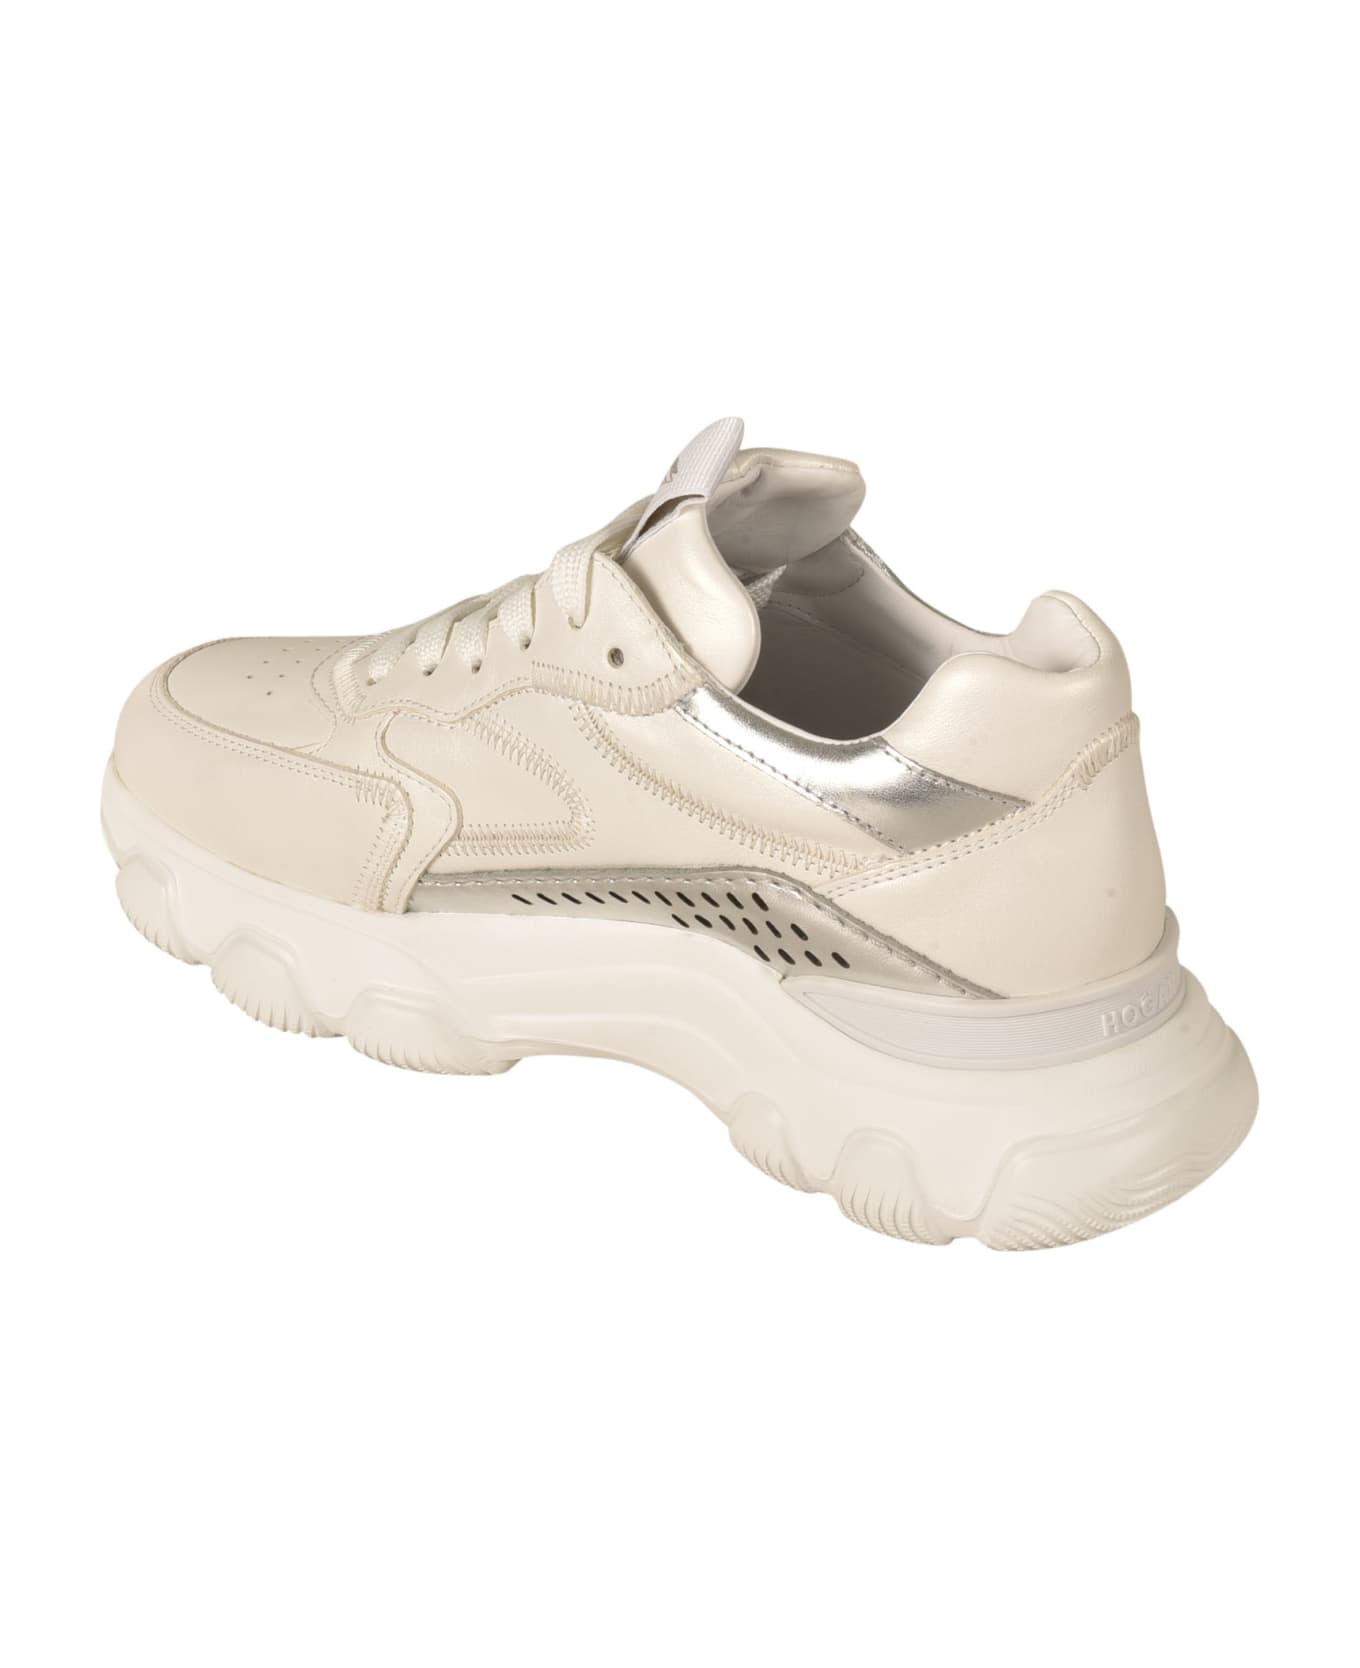 Hogan Hyperactive Sneakers - Argento Bianco スニーカー